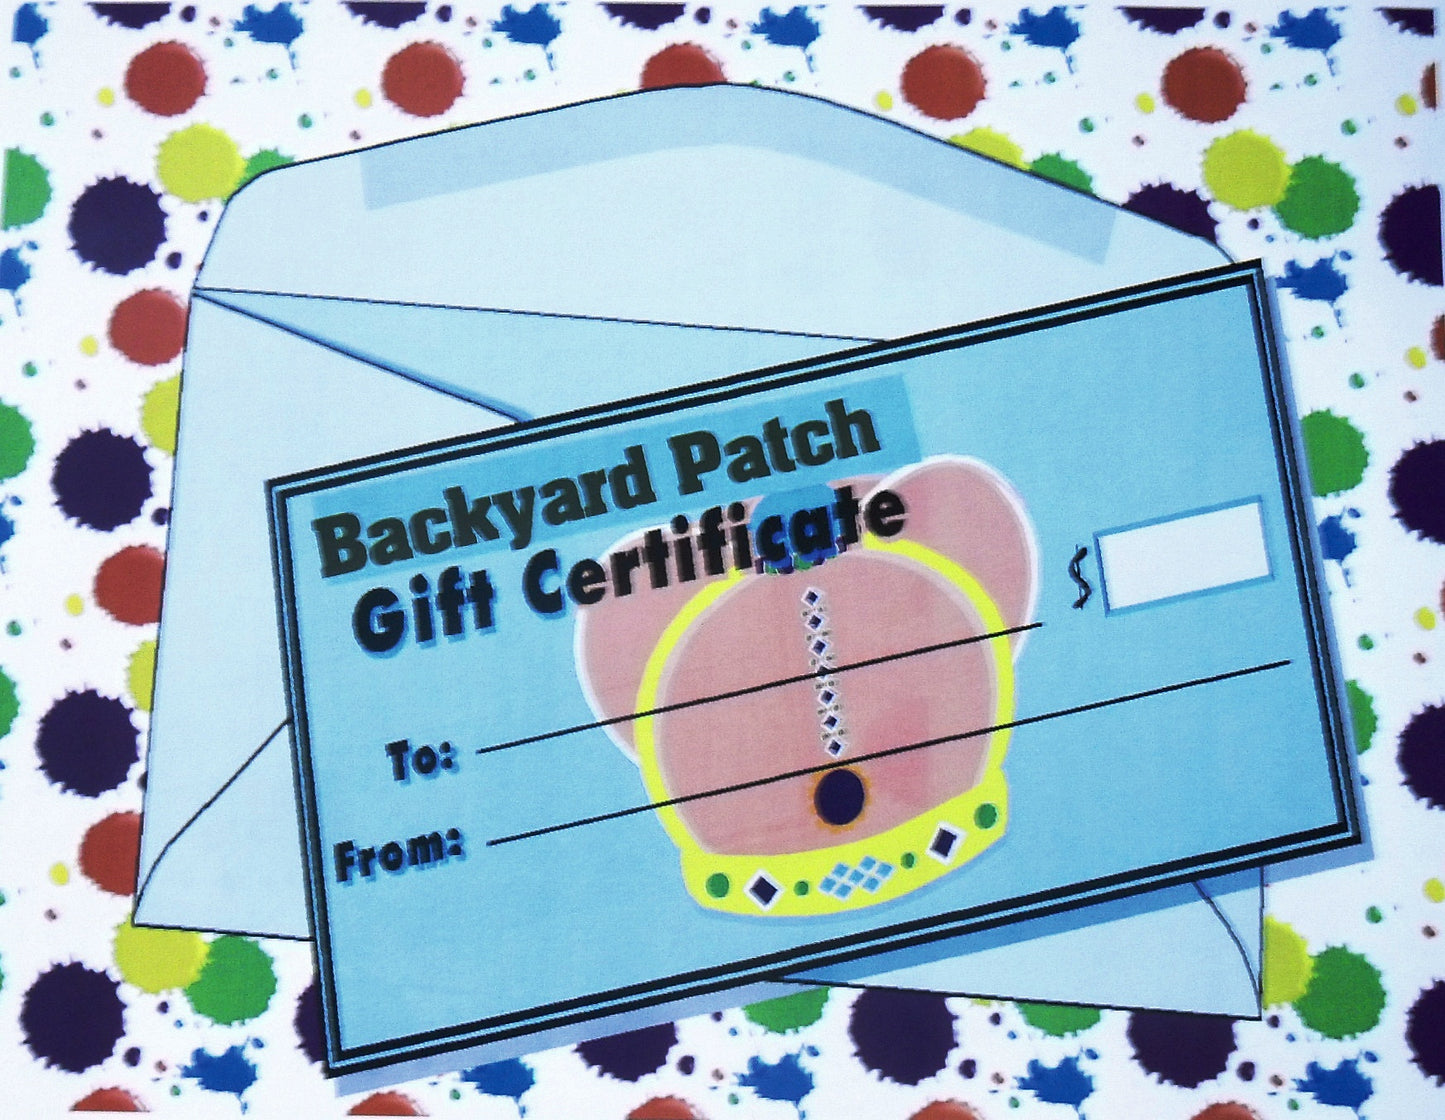 Backyard Patch Gift Certificate / Gift Card